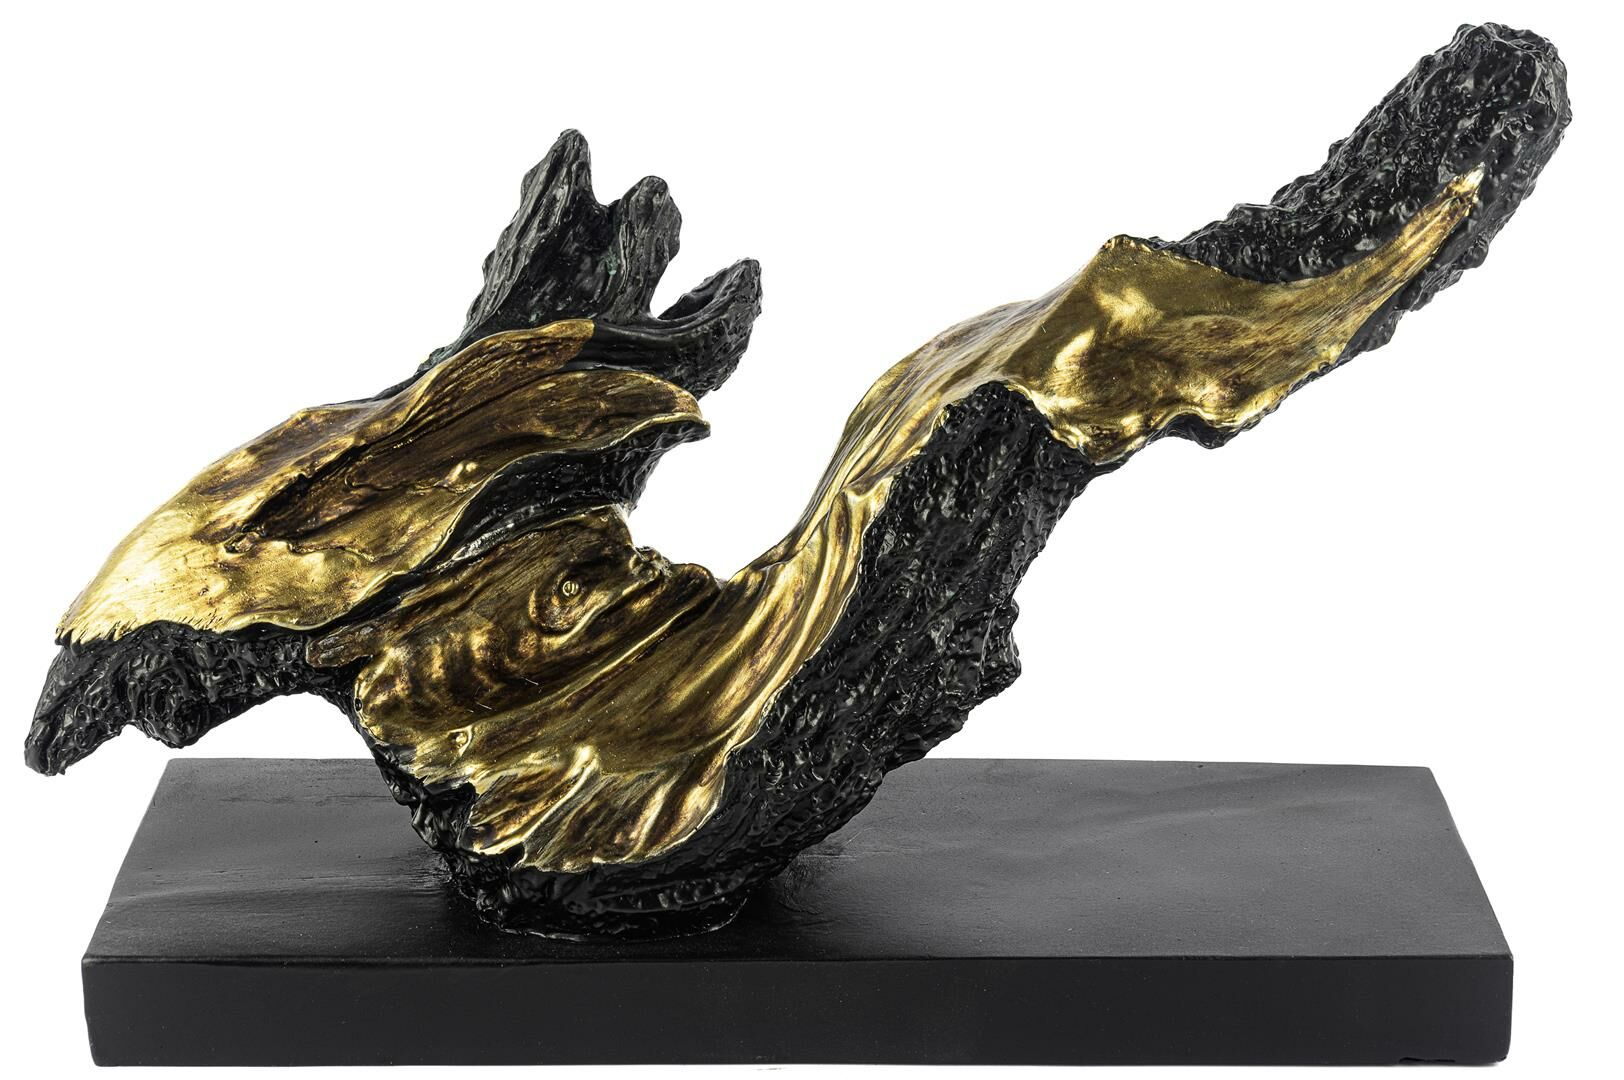 Siyah Gold Dal Dekoratif Resin Obje 40x16x26cm